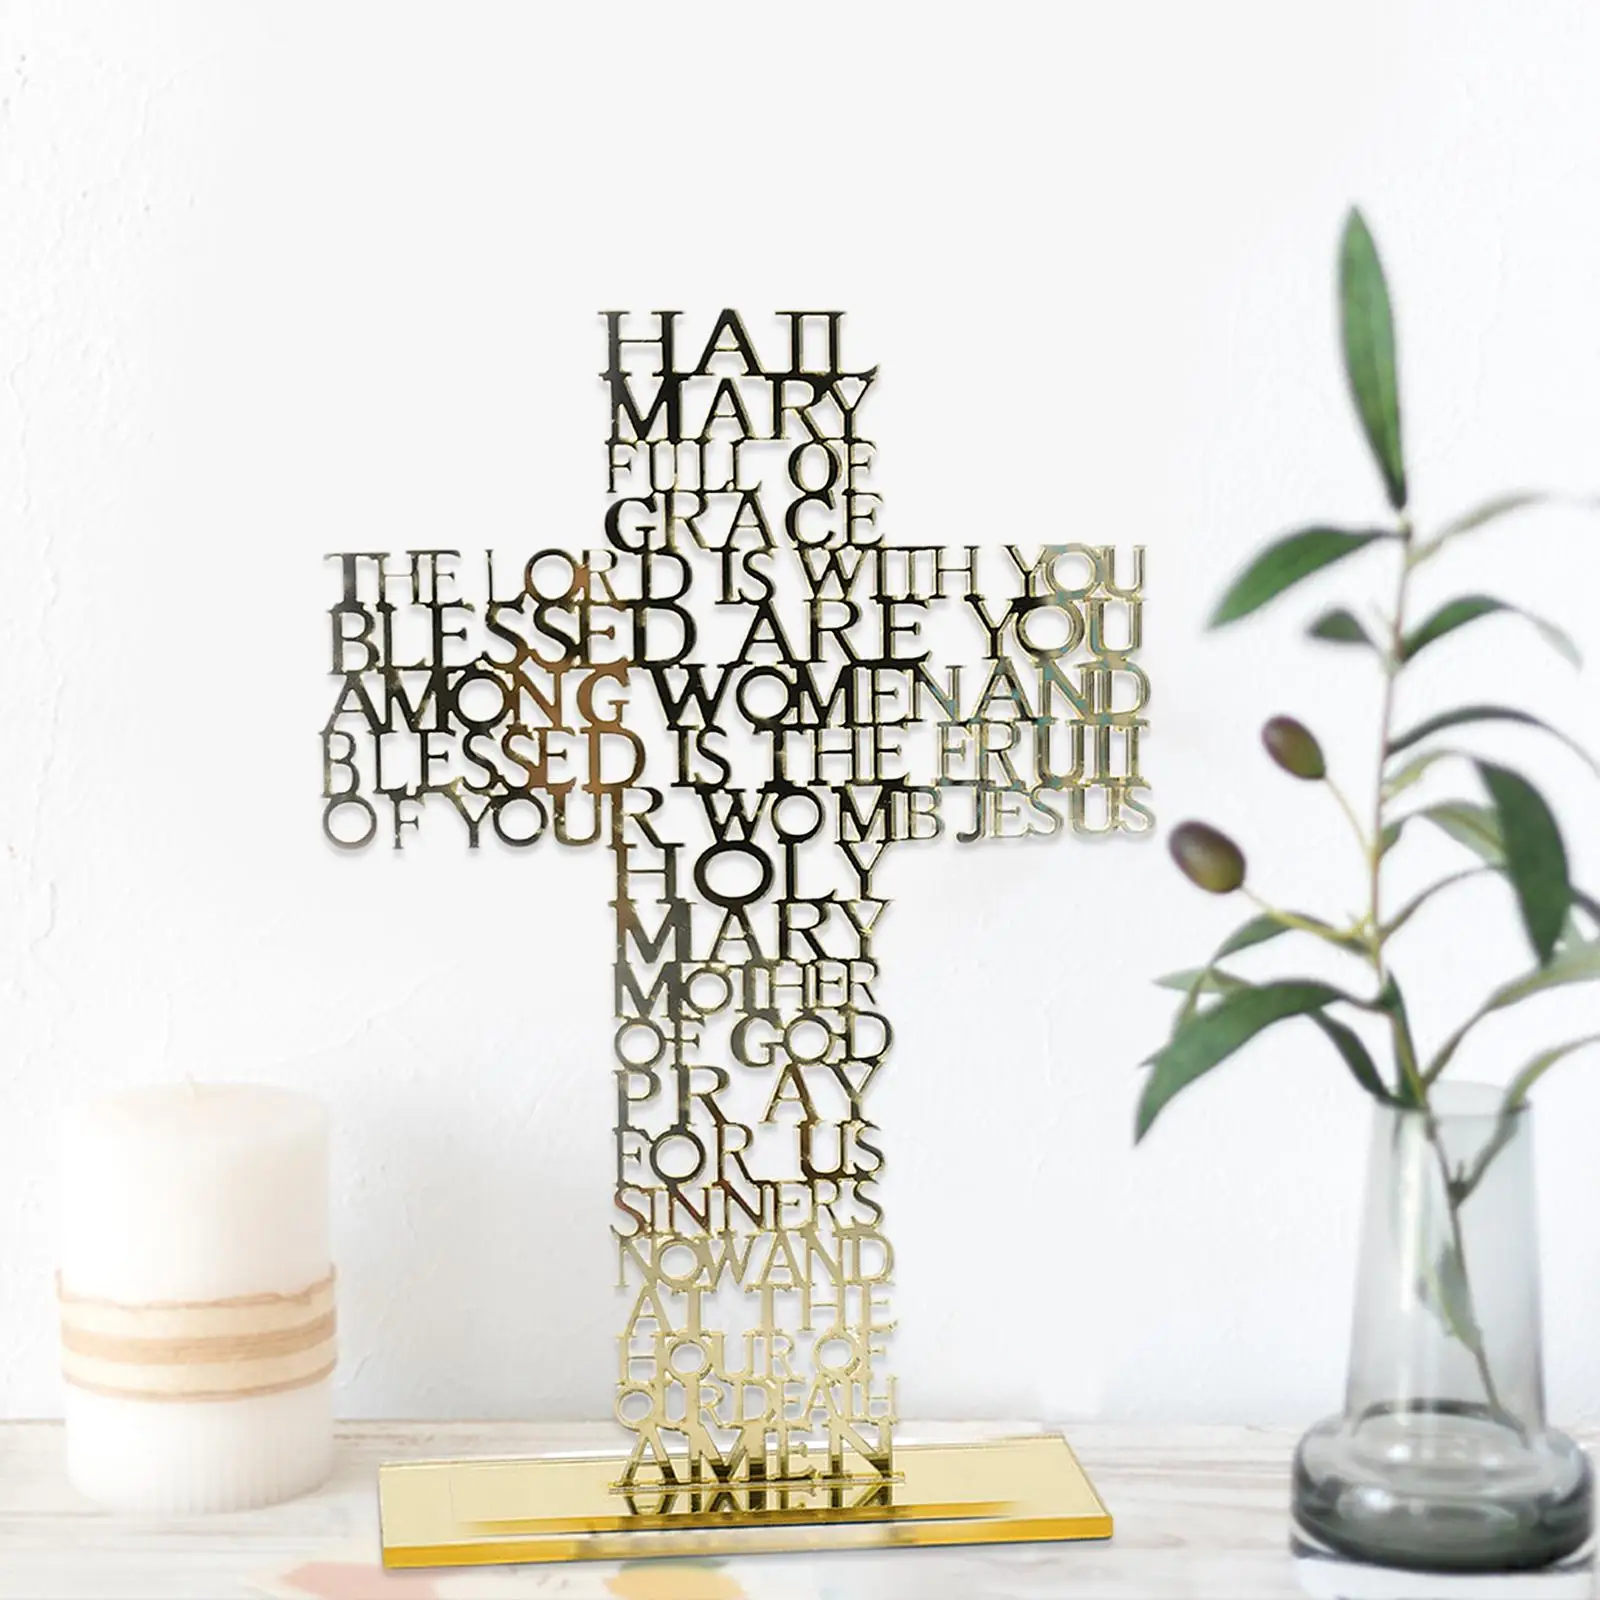  Standing Crucifix Miniature  Scriptures  Relics Statue Bedroom Easter Decorative